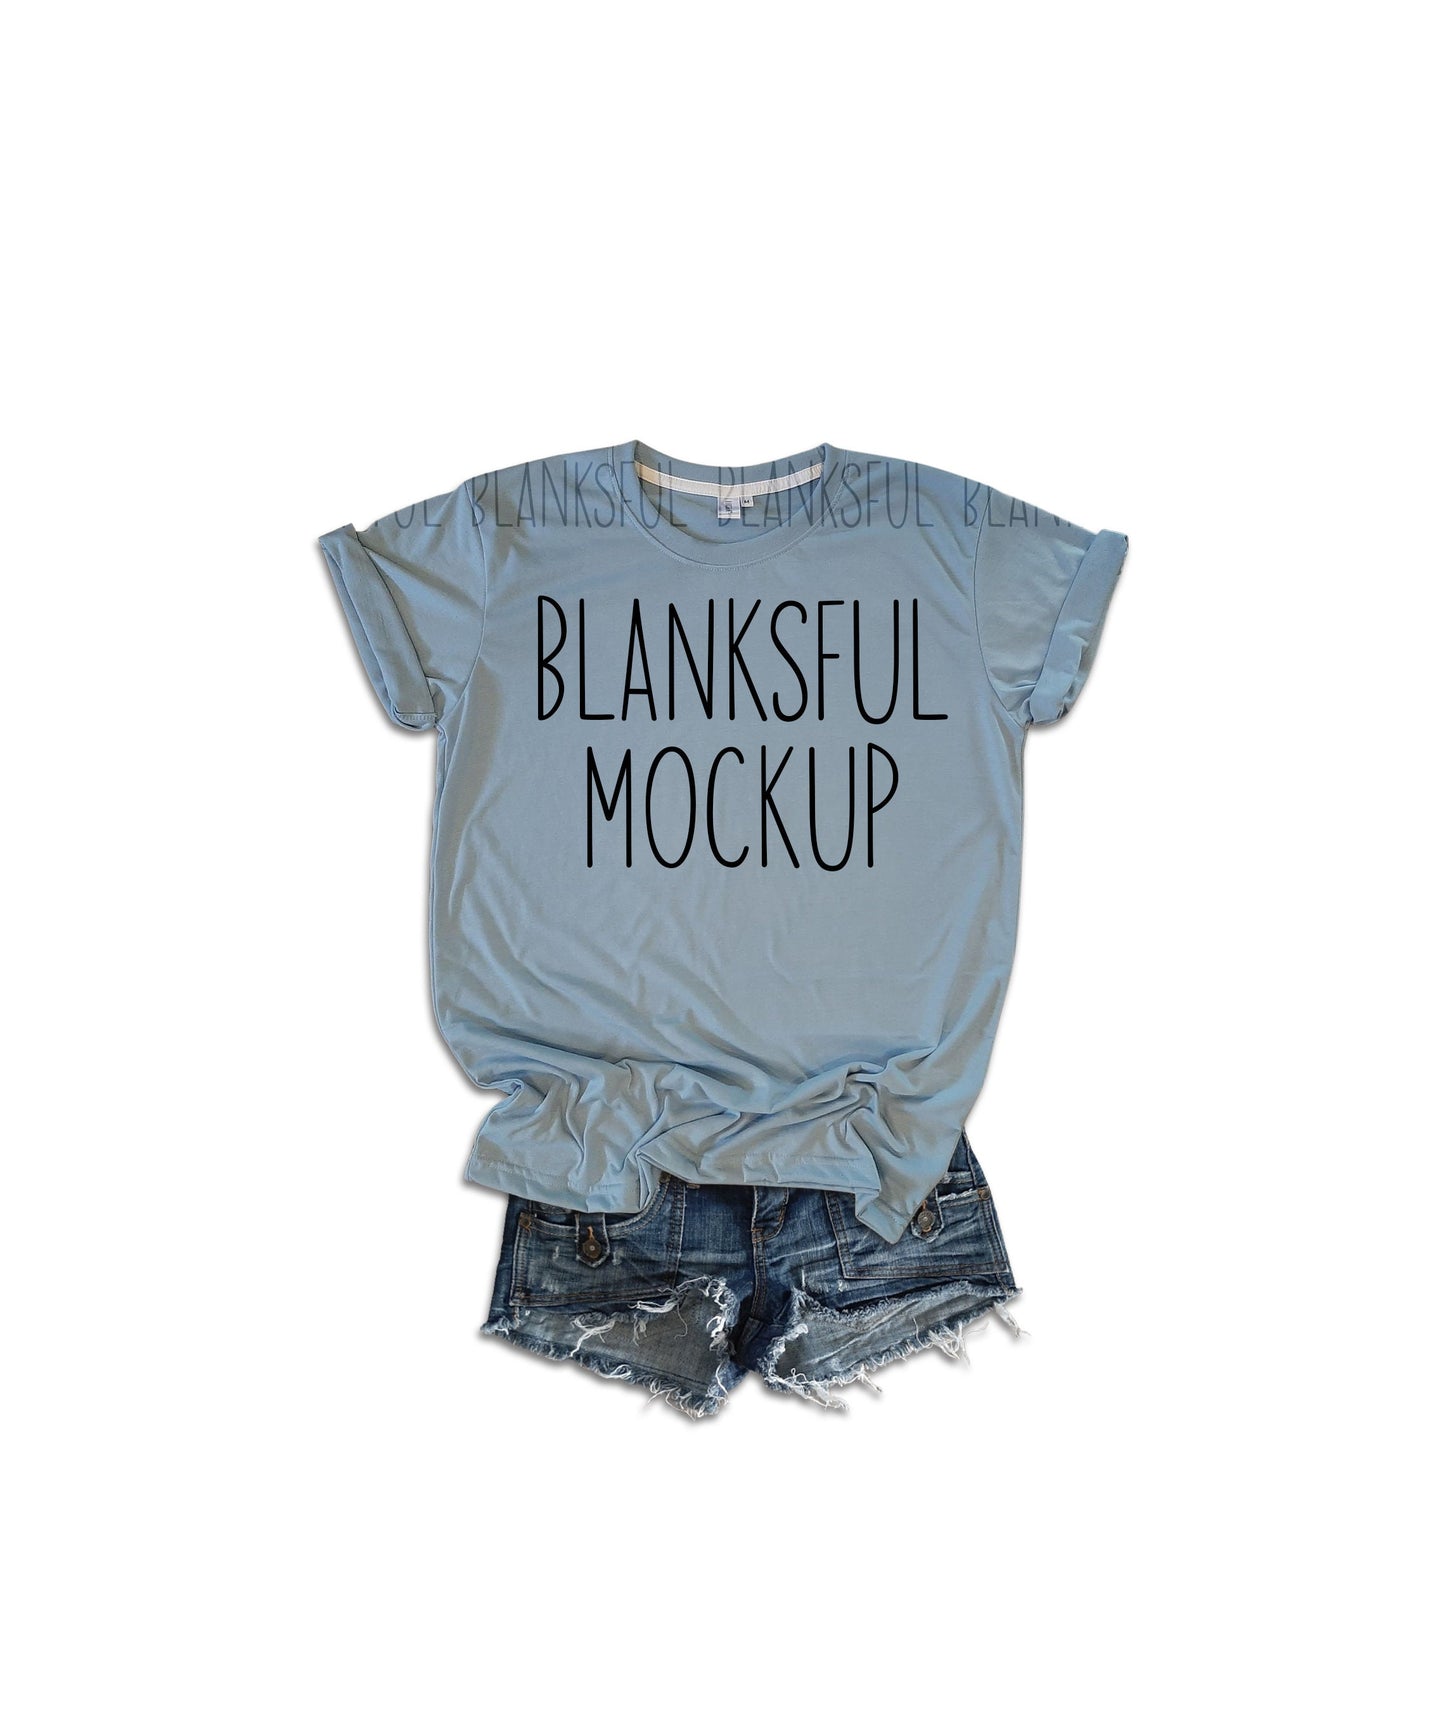 Blanksful Mockup Steel Adult Unisex Shirt - Shirt mockup - Mock up shirt - Flay Lay Mockup - Digital Download - Styled Mockup